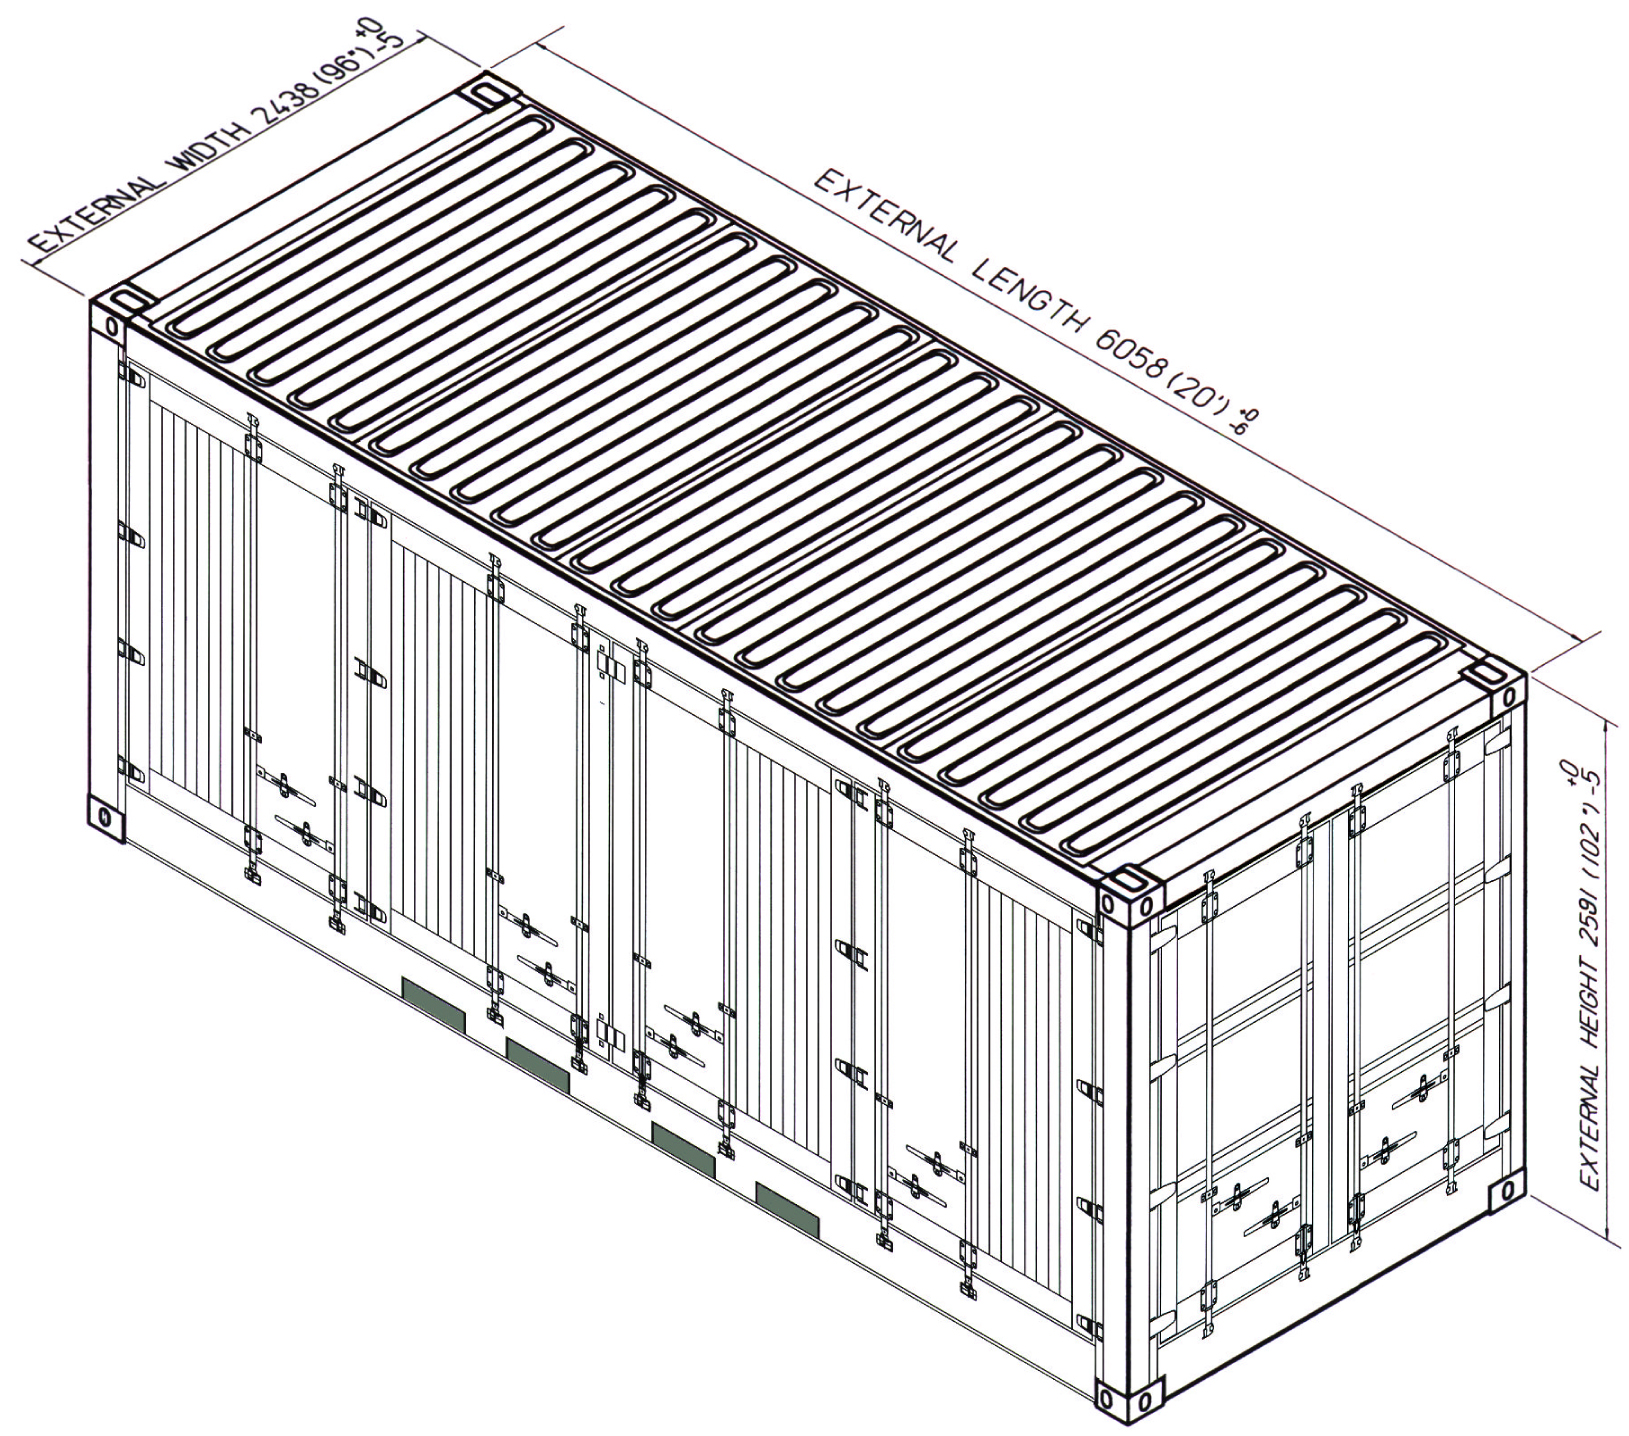 SEA BOX, Intermodal Concepts, ISO Shipping Containers, Connex Boxes